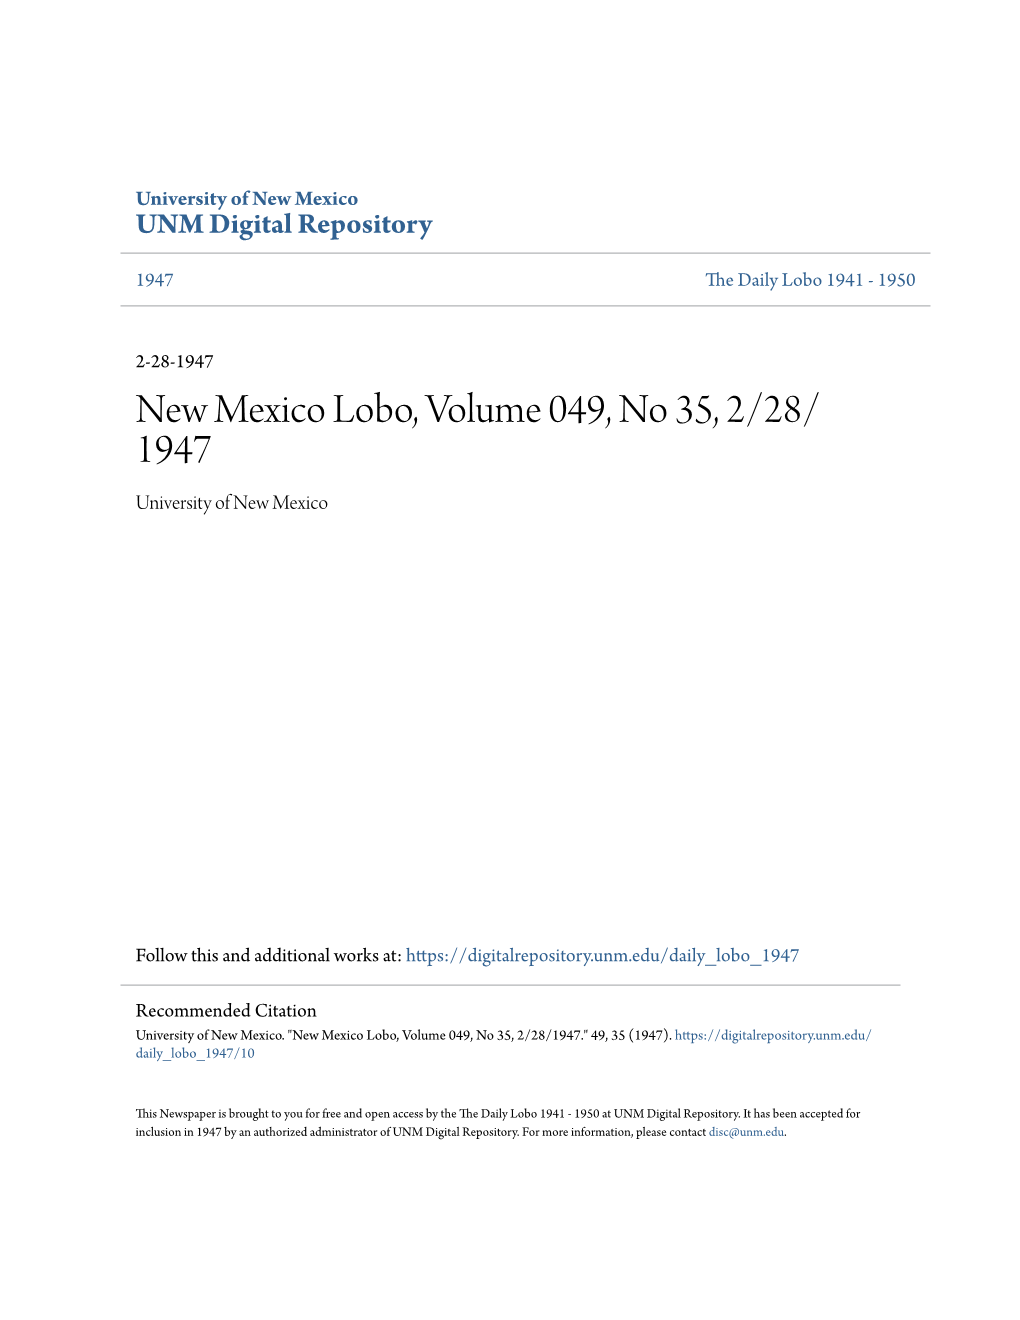 New Mexico Lobo, Volume 049, No 35, 2/28/1947." 49, 35 (1947)